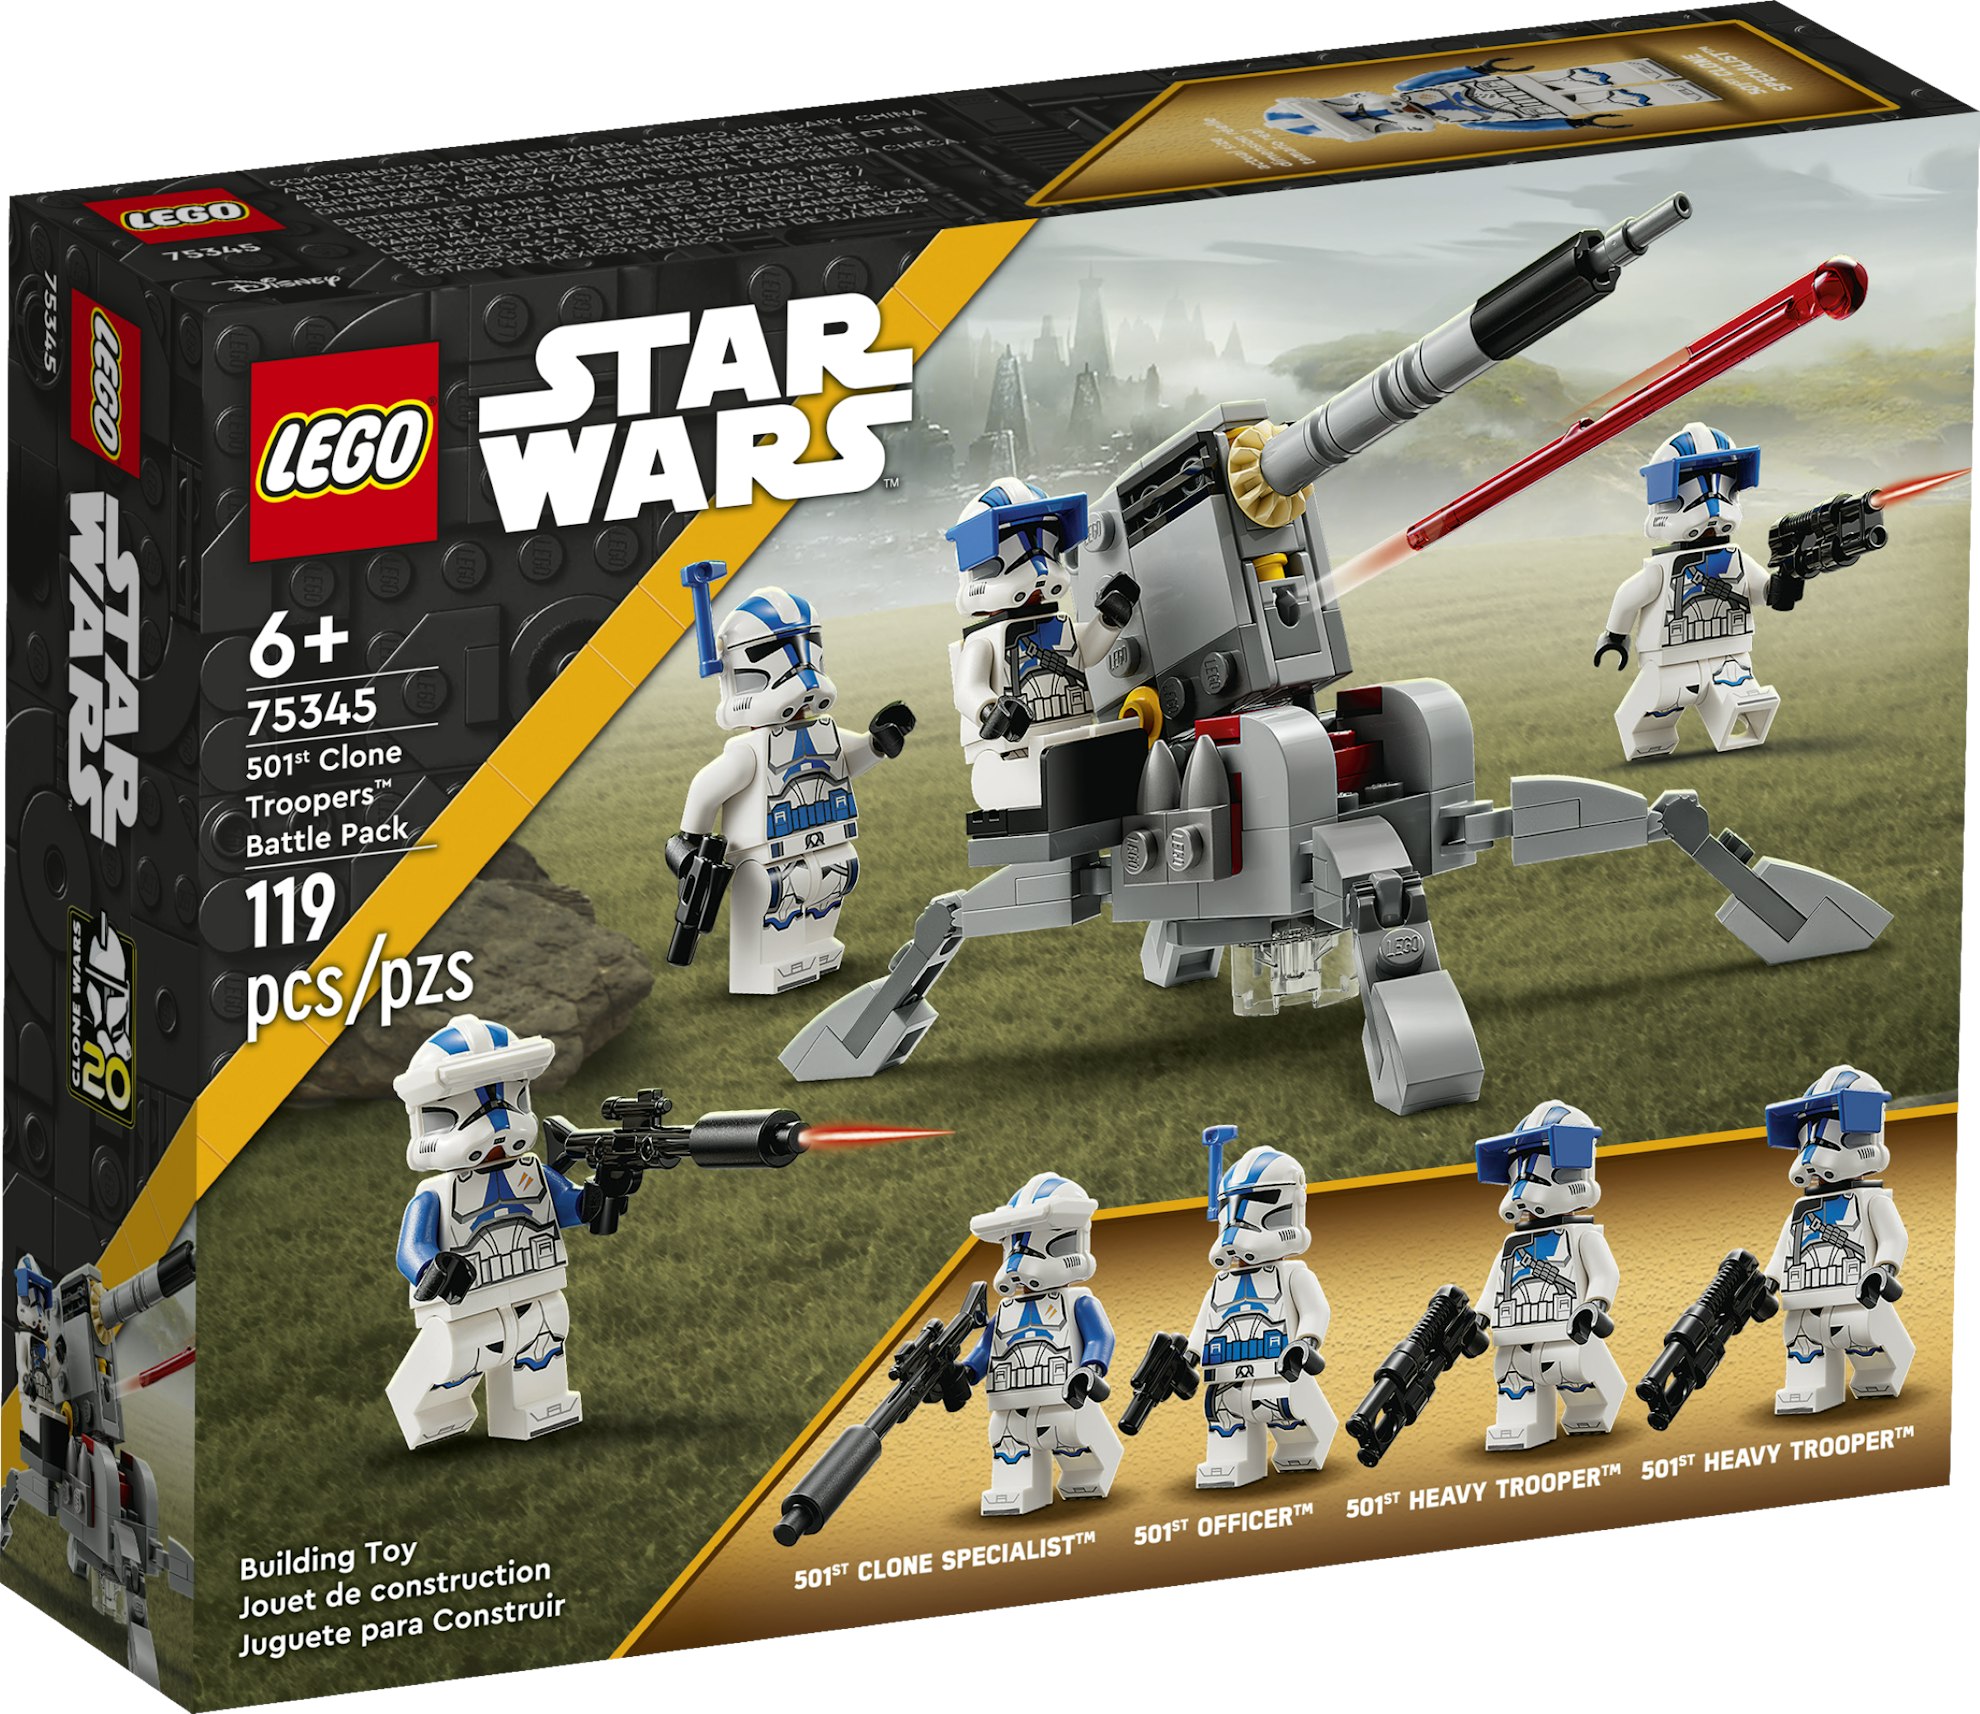 LEGO Star Wars 501st Troopers Set 75345 - US